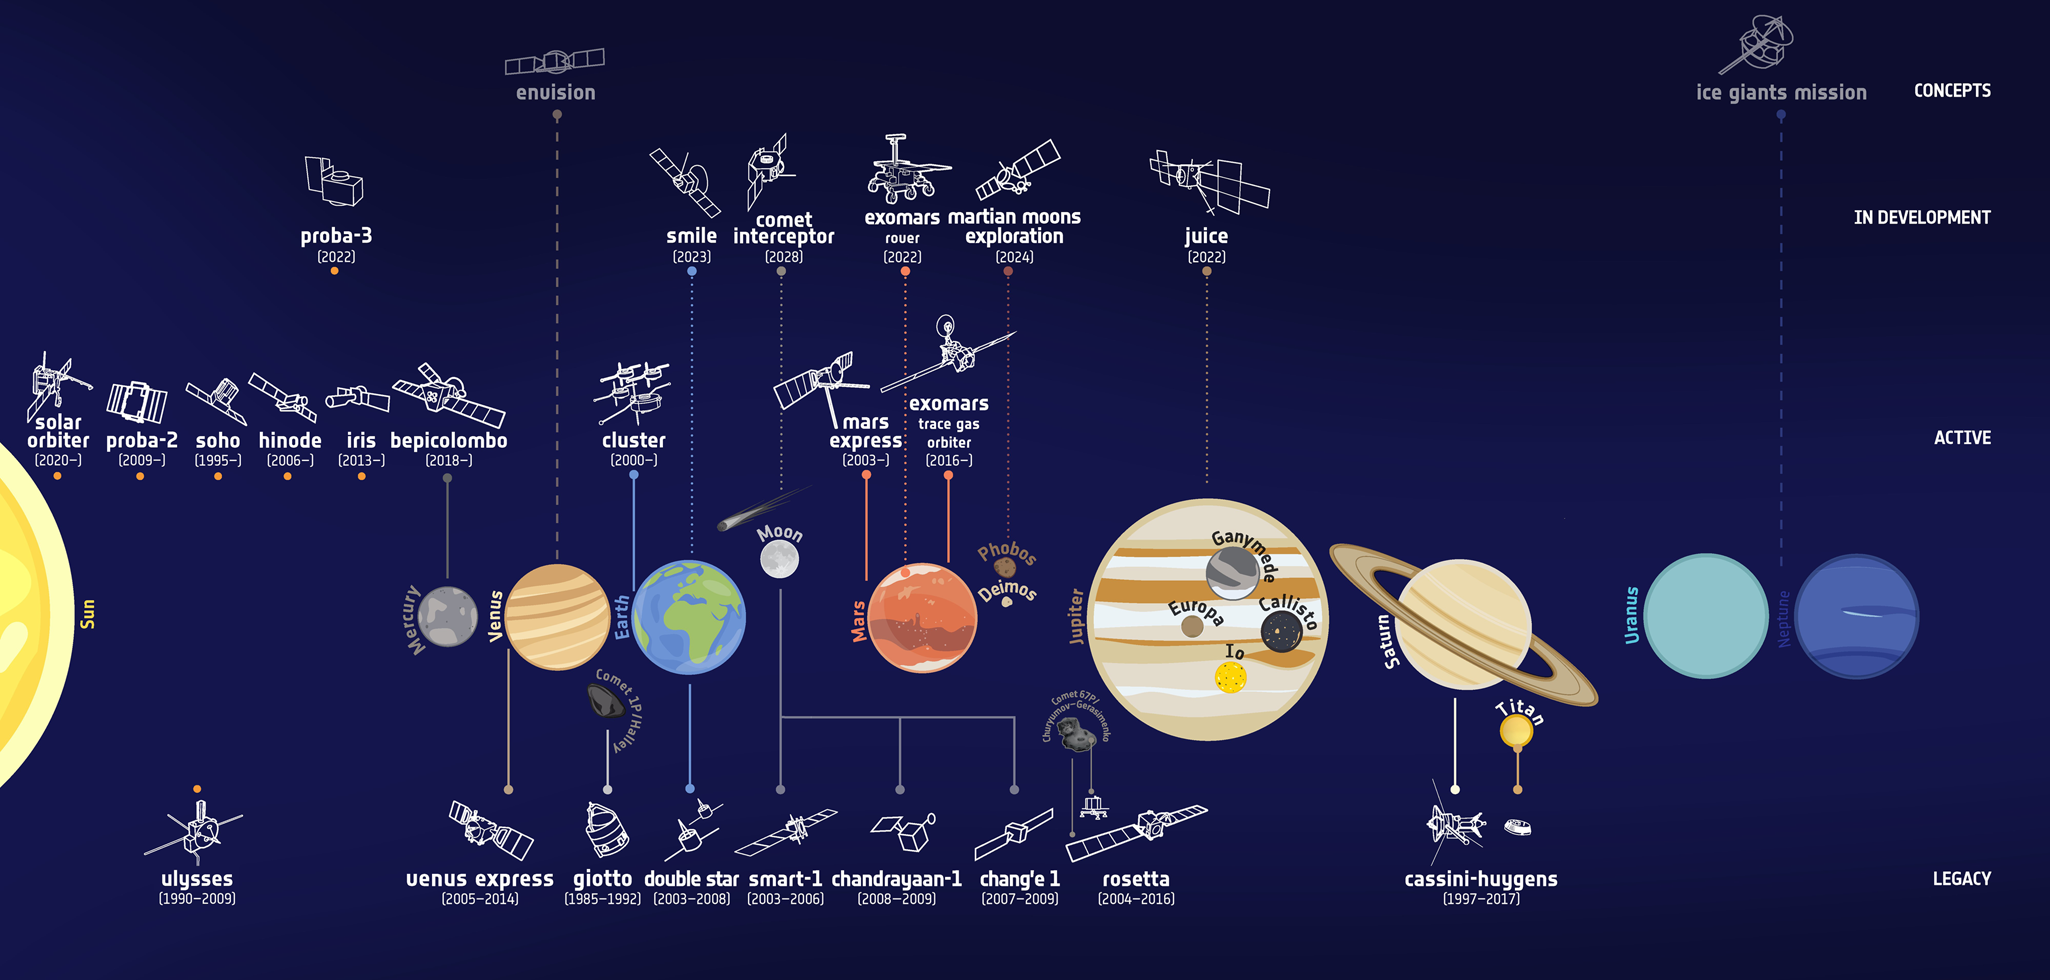 Solar system exploration via comparative planetology | Nature Communications